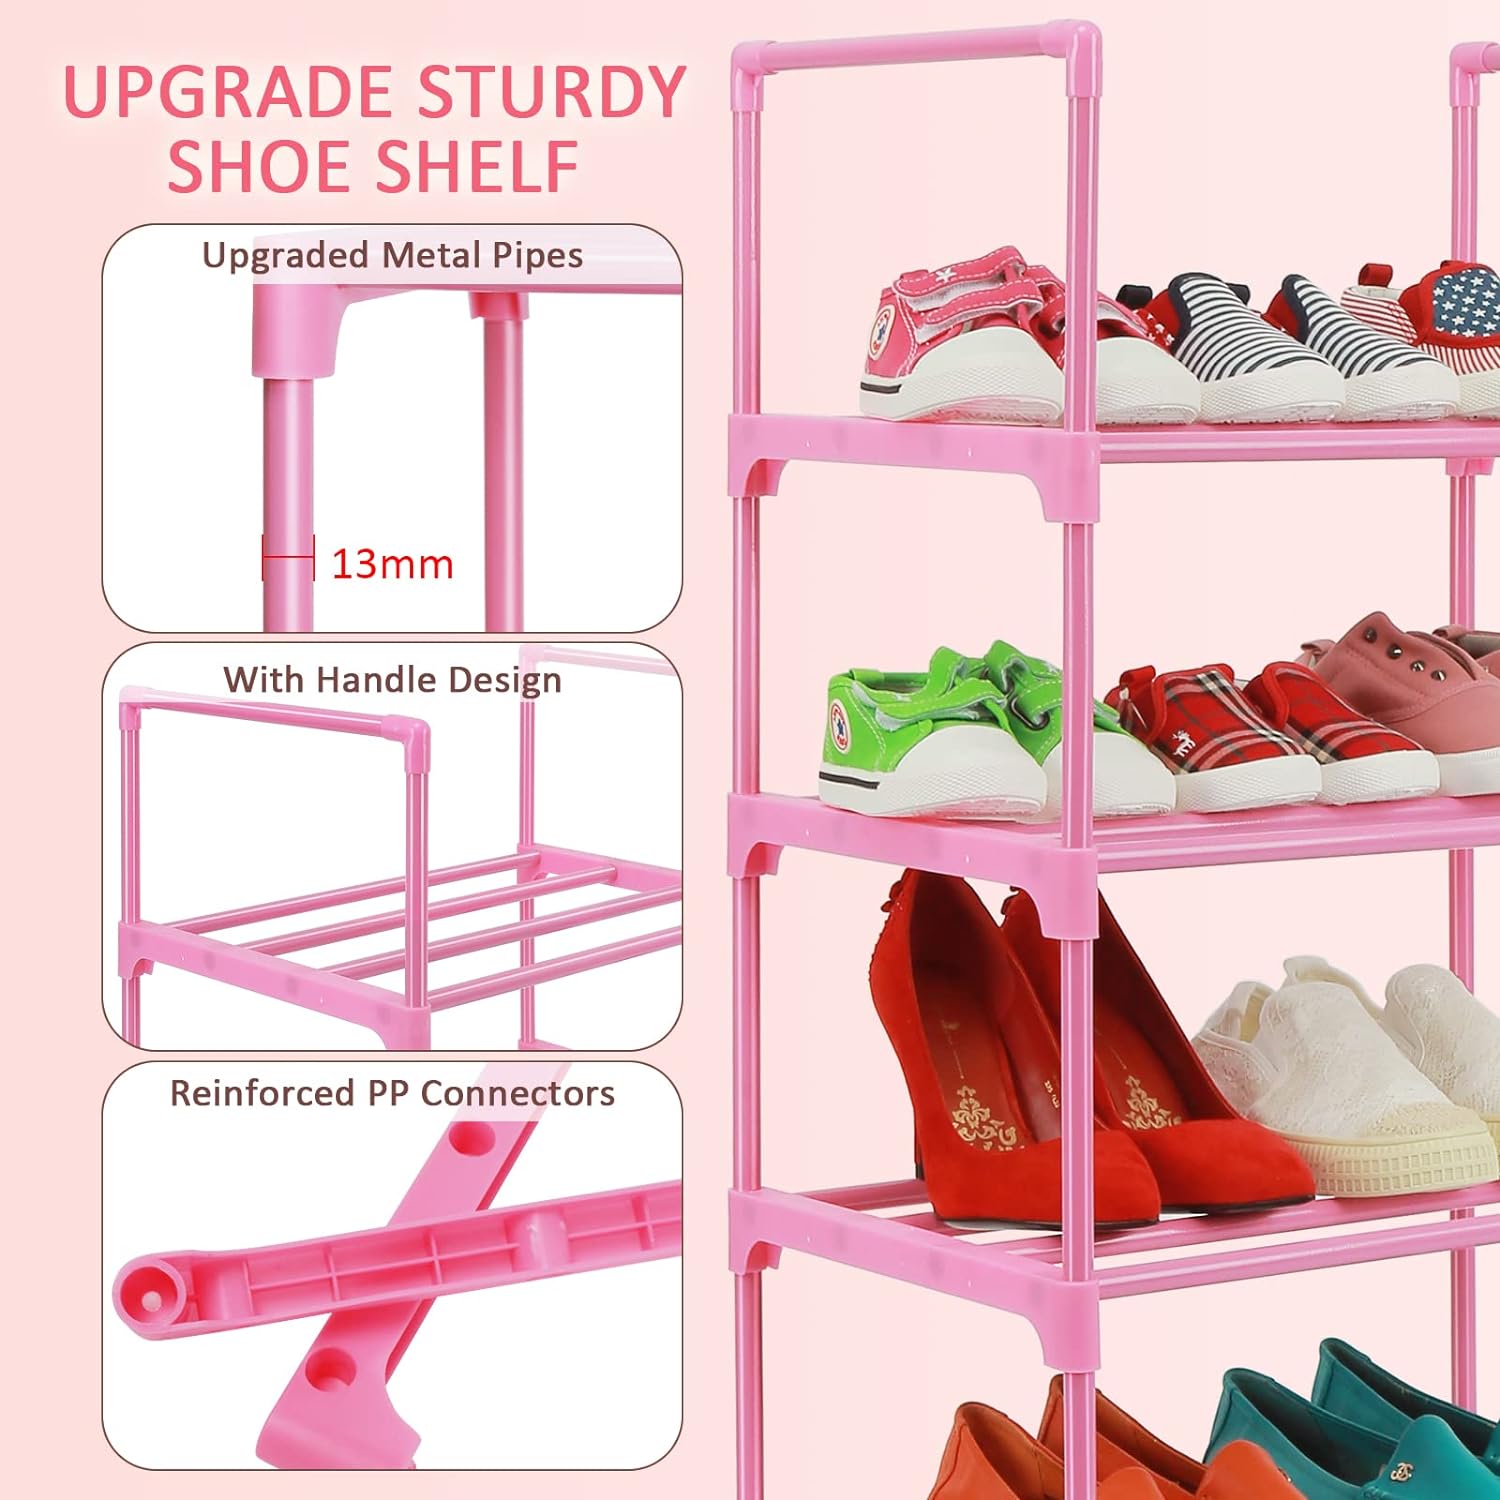 Organizador de zapatos pequeños de 5 niveles para niños, estante de zapatos